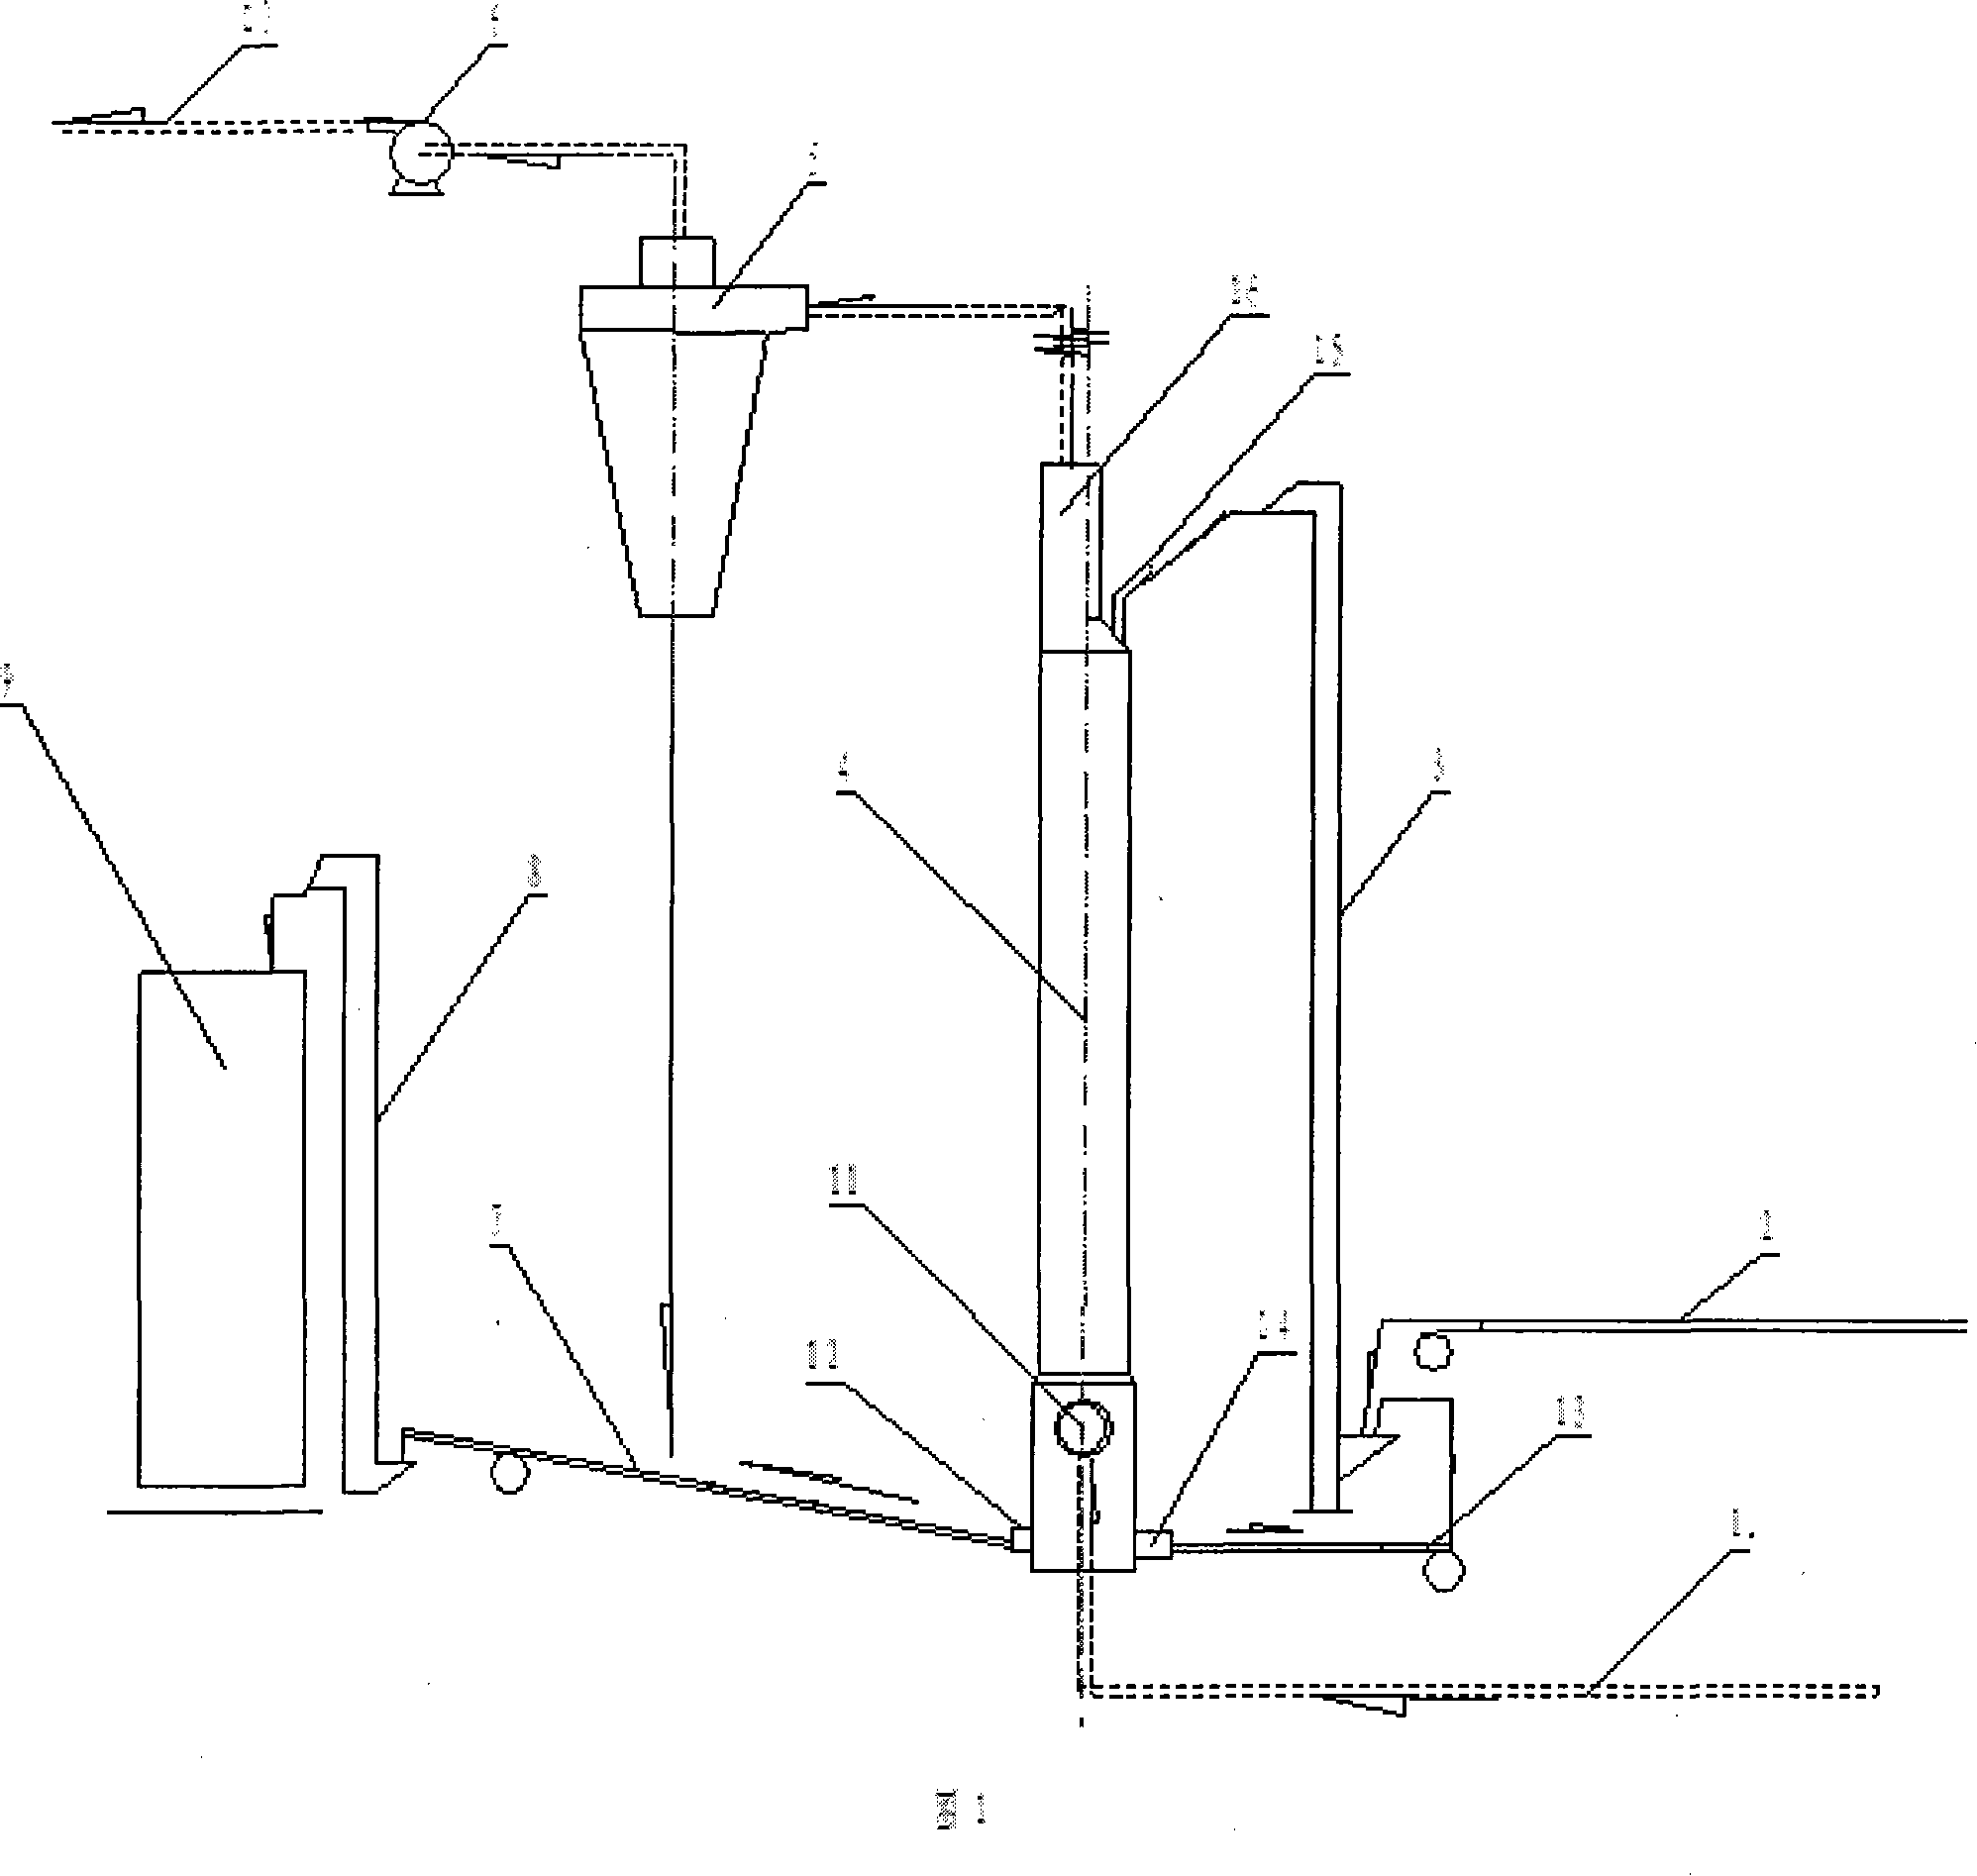 Drying system using rotary kiln waste gas residual heat